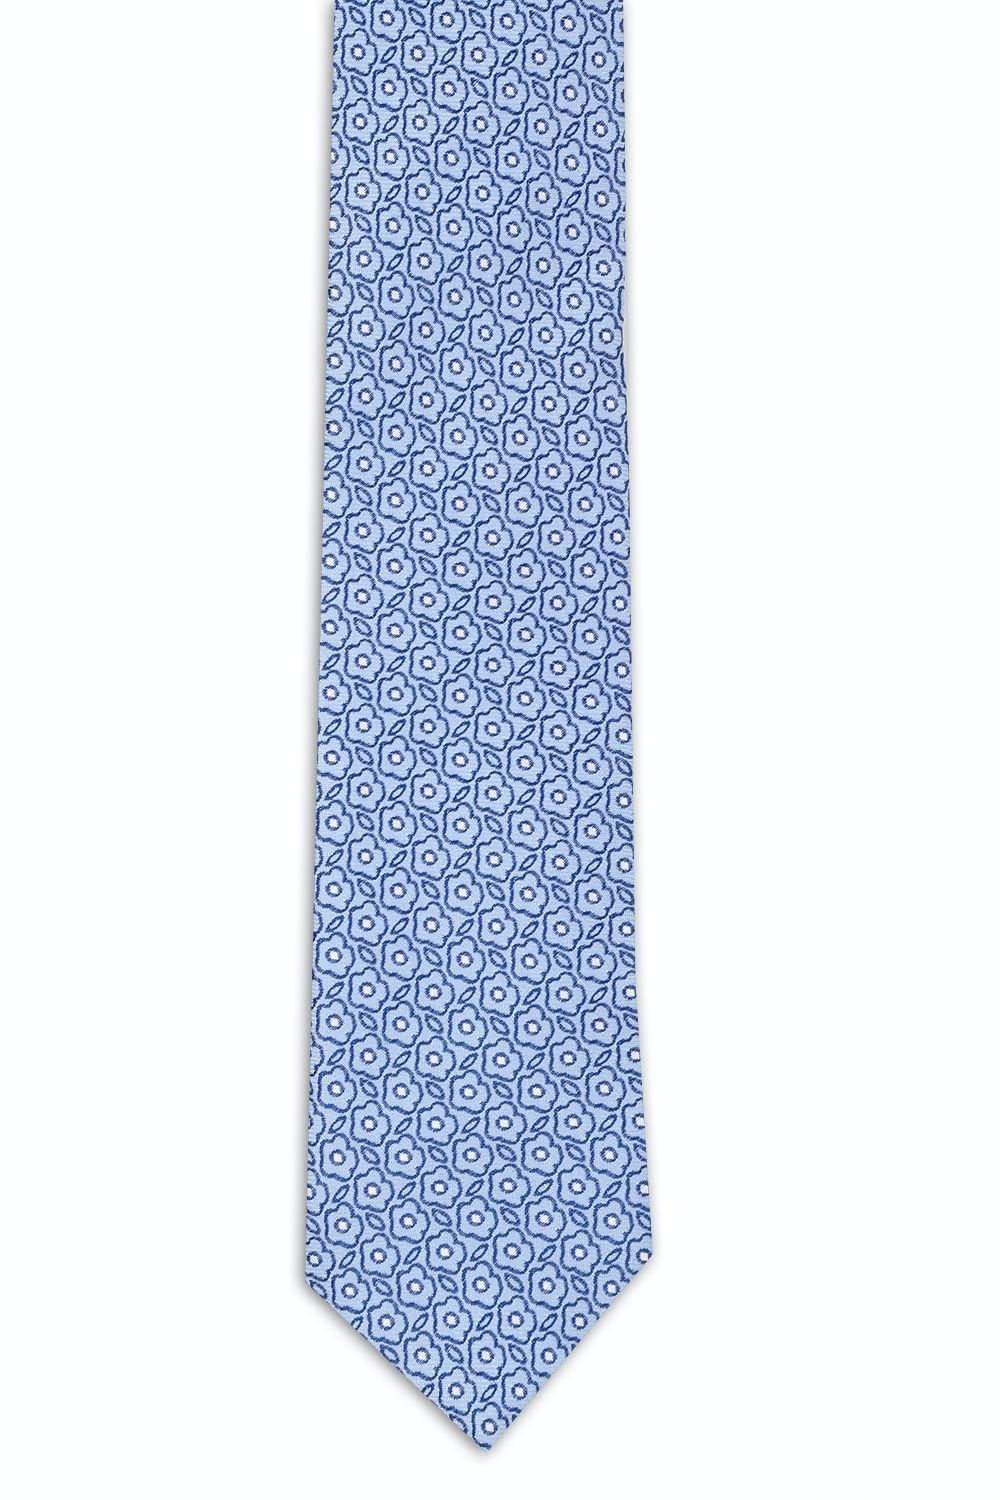 Louis Philippe Blue Tie (lpticrgff000539)